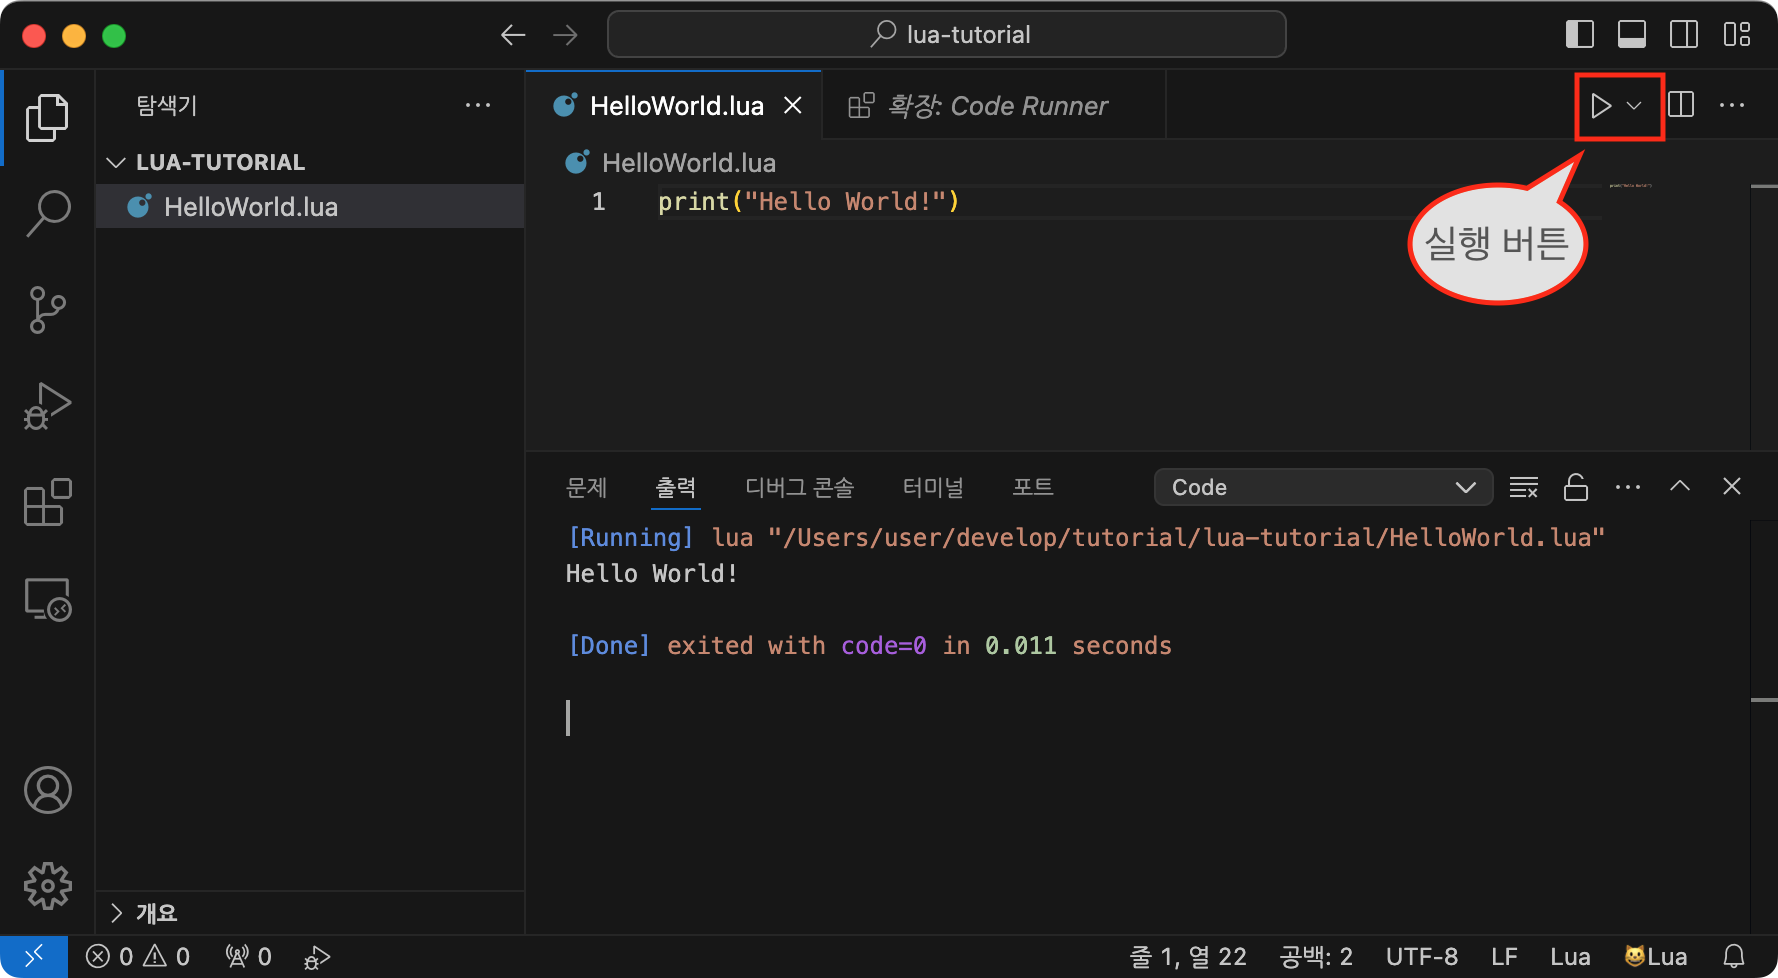 Lua Visual Studio Code